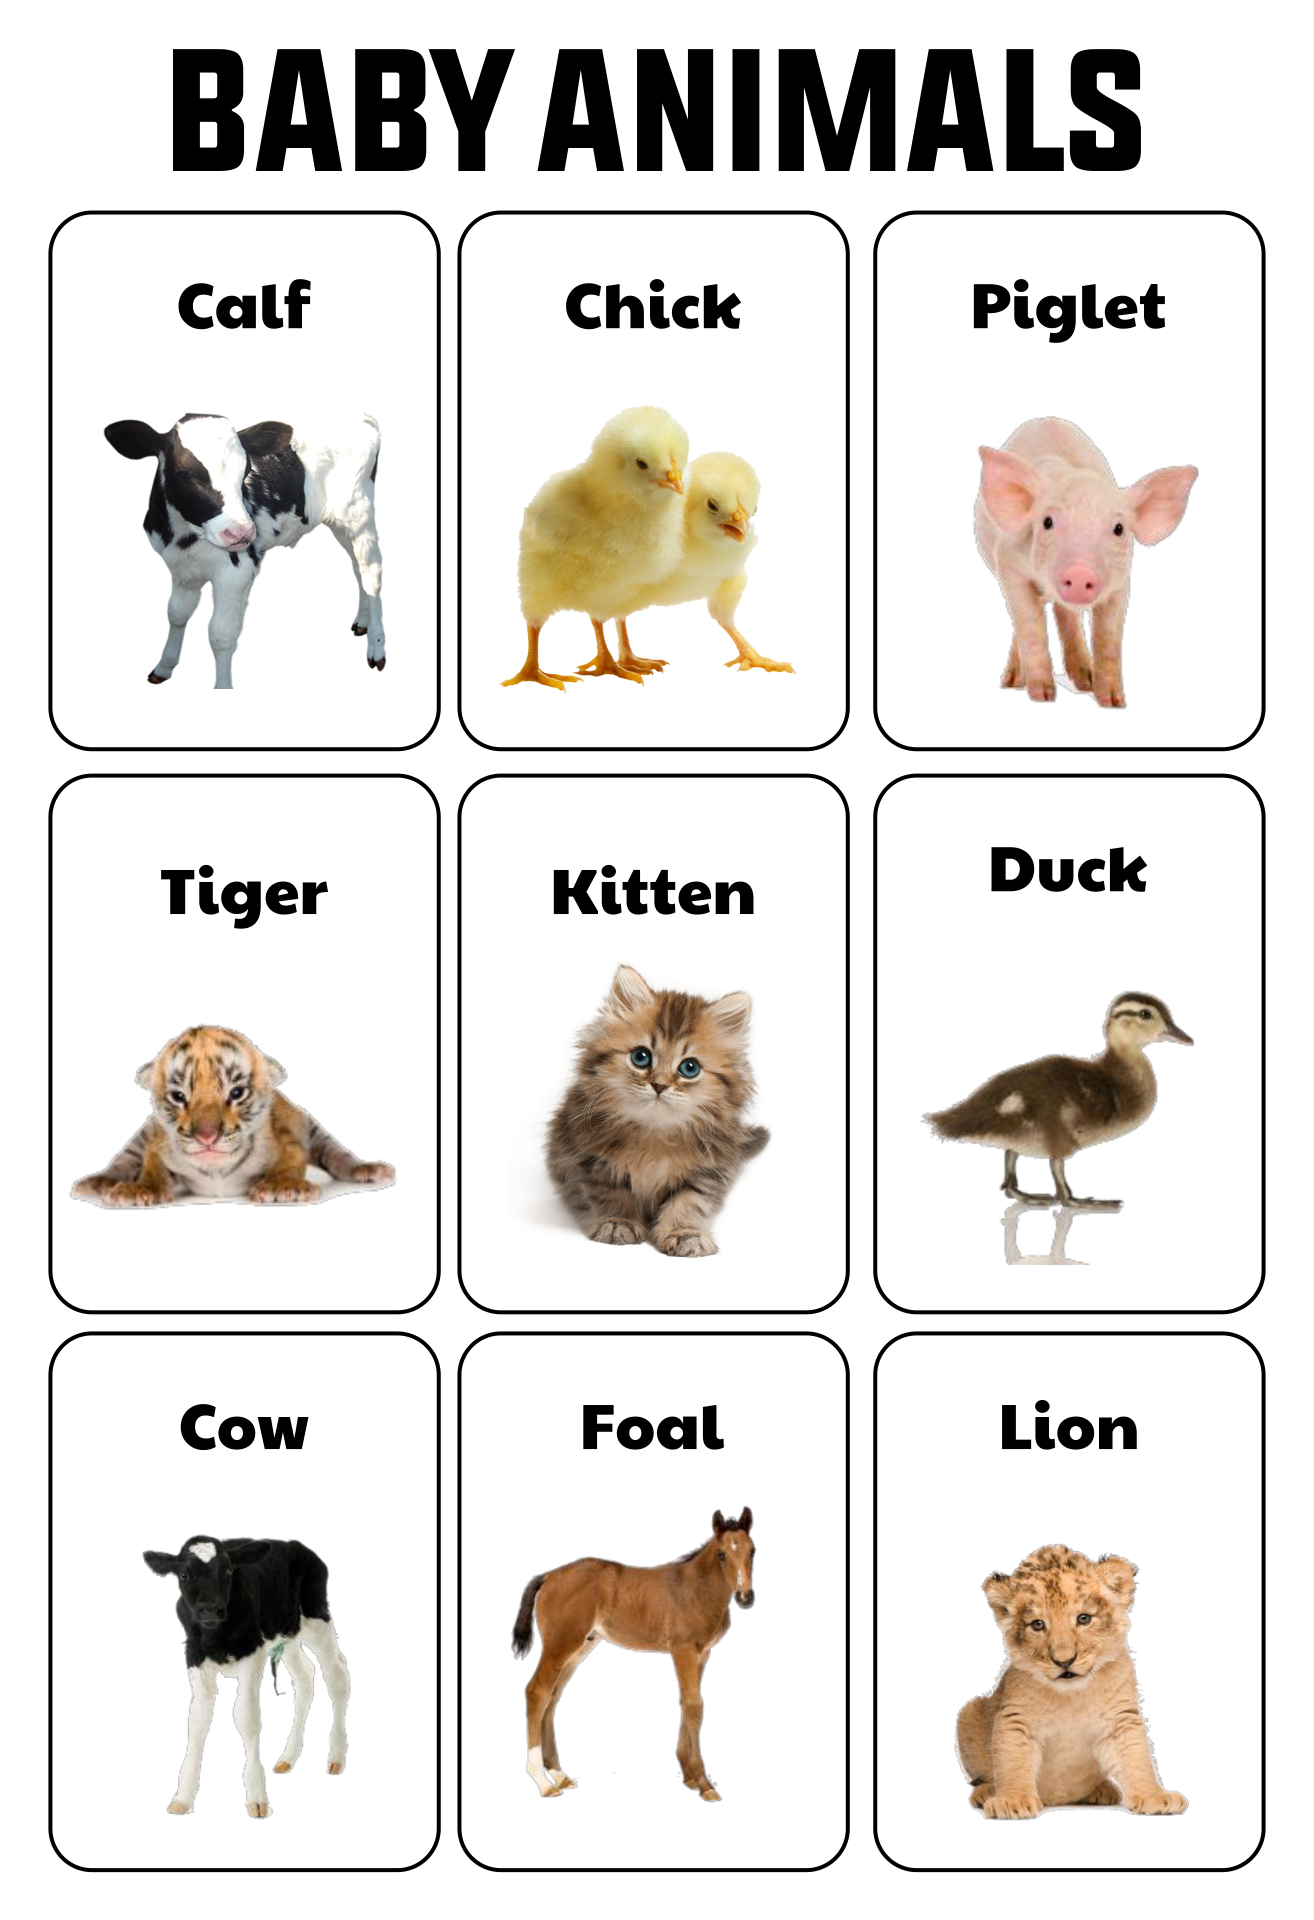 10 Best Free Printable Animal Flash Cards Pdf For Free At Printablee